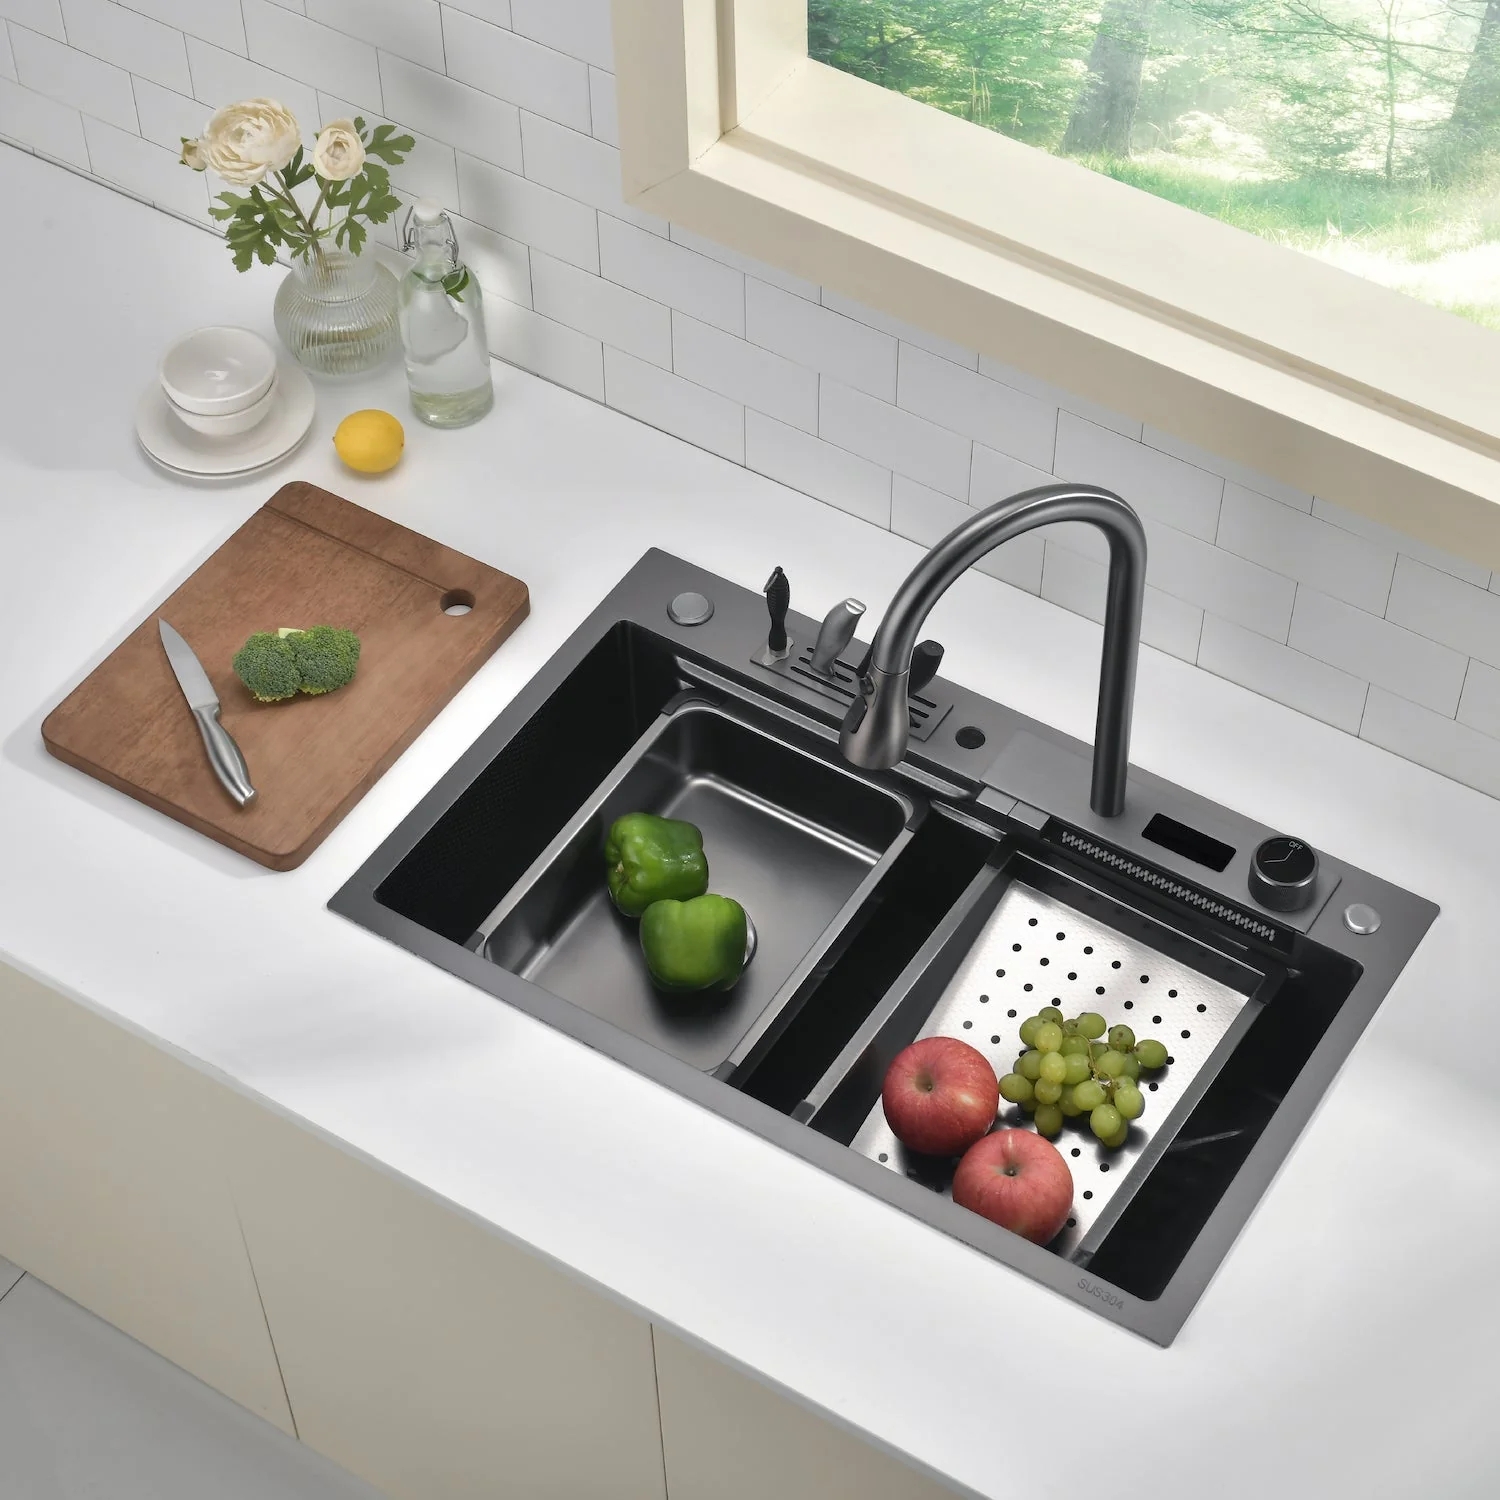 lefton-home-kitchen-sinks-ks2204-2a-755642_1800x1800.webp.jpg